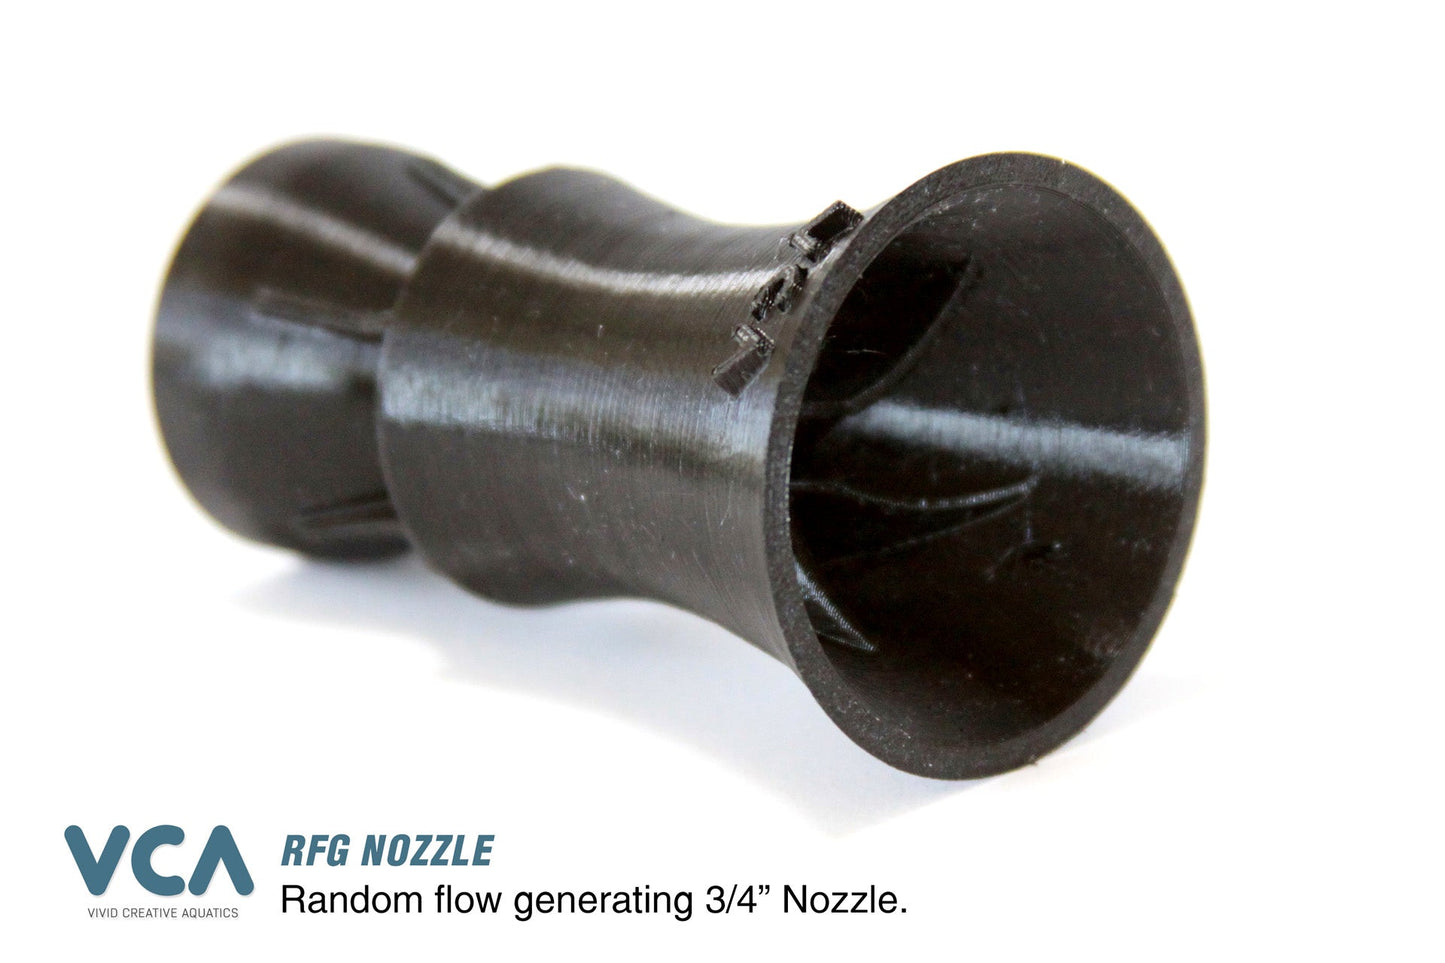 VCA 3/4" RFG Nozzle Random flow generator